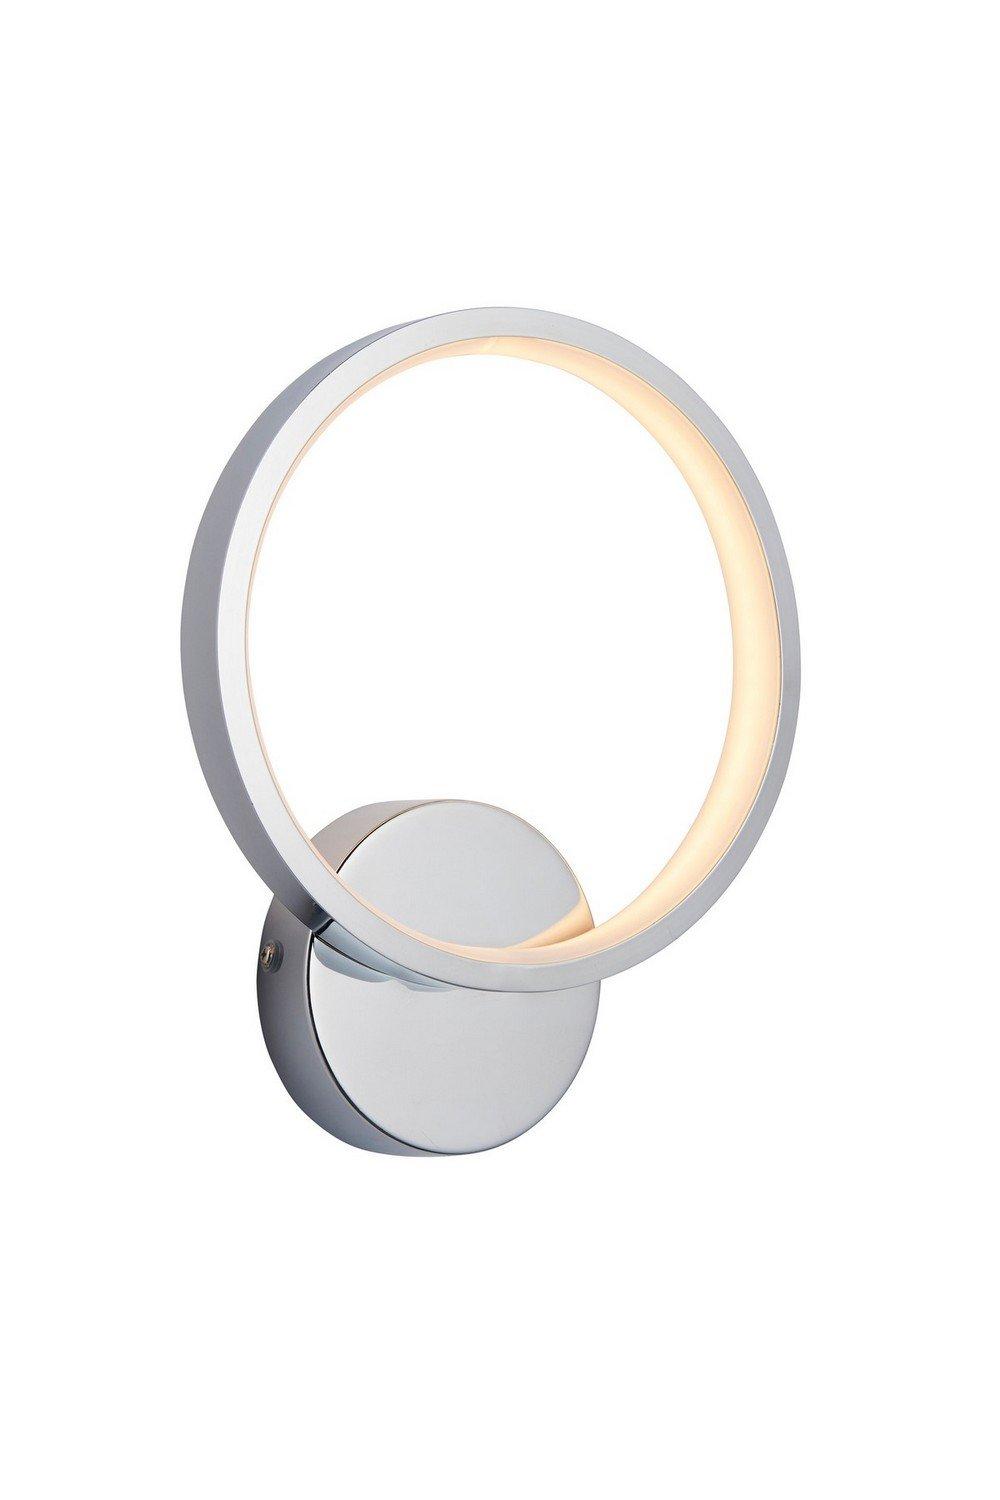 Radius Modern Designer Round LED Wall Light Chrome Warm White IP44